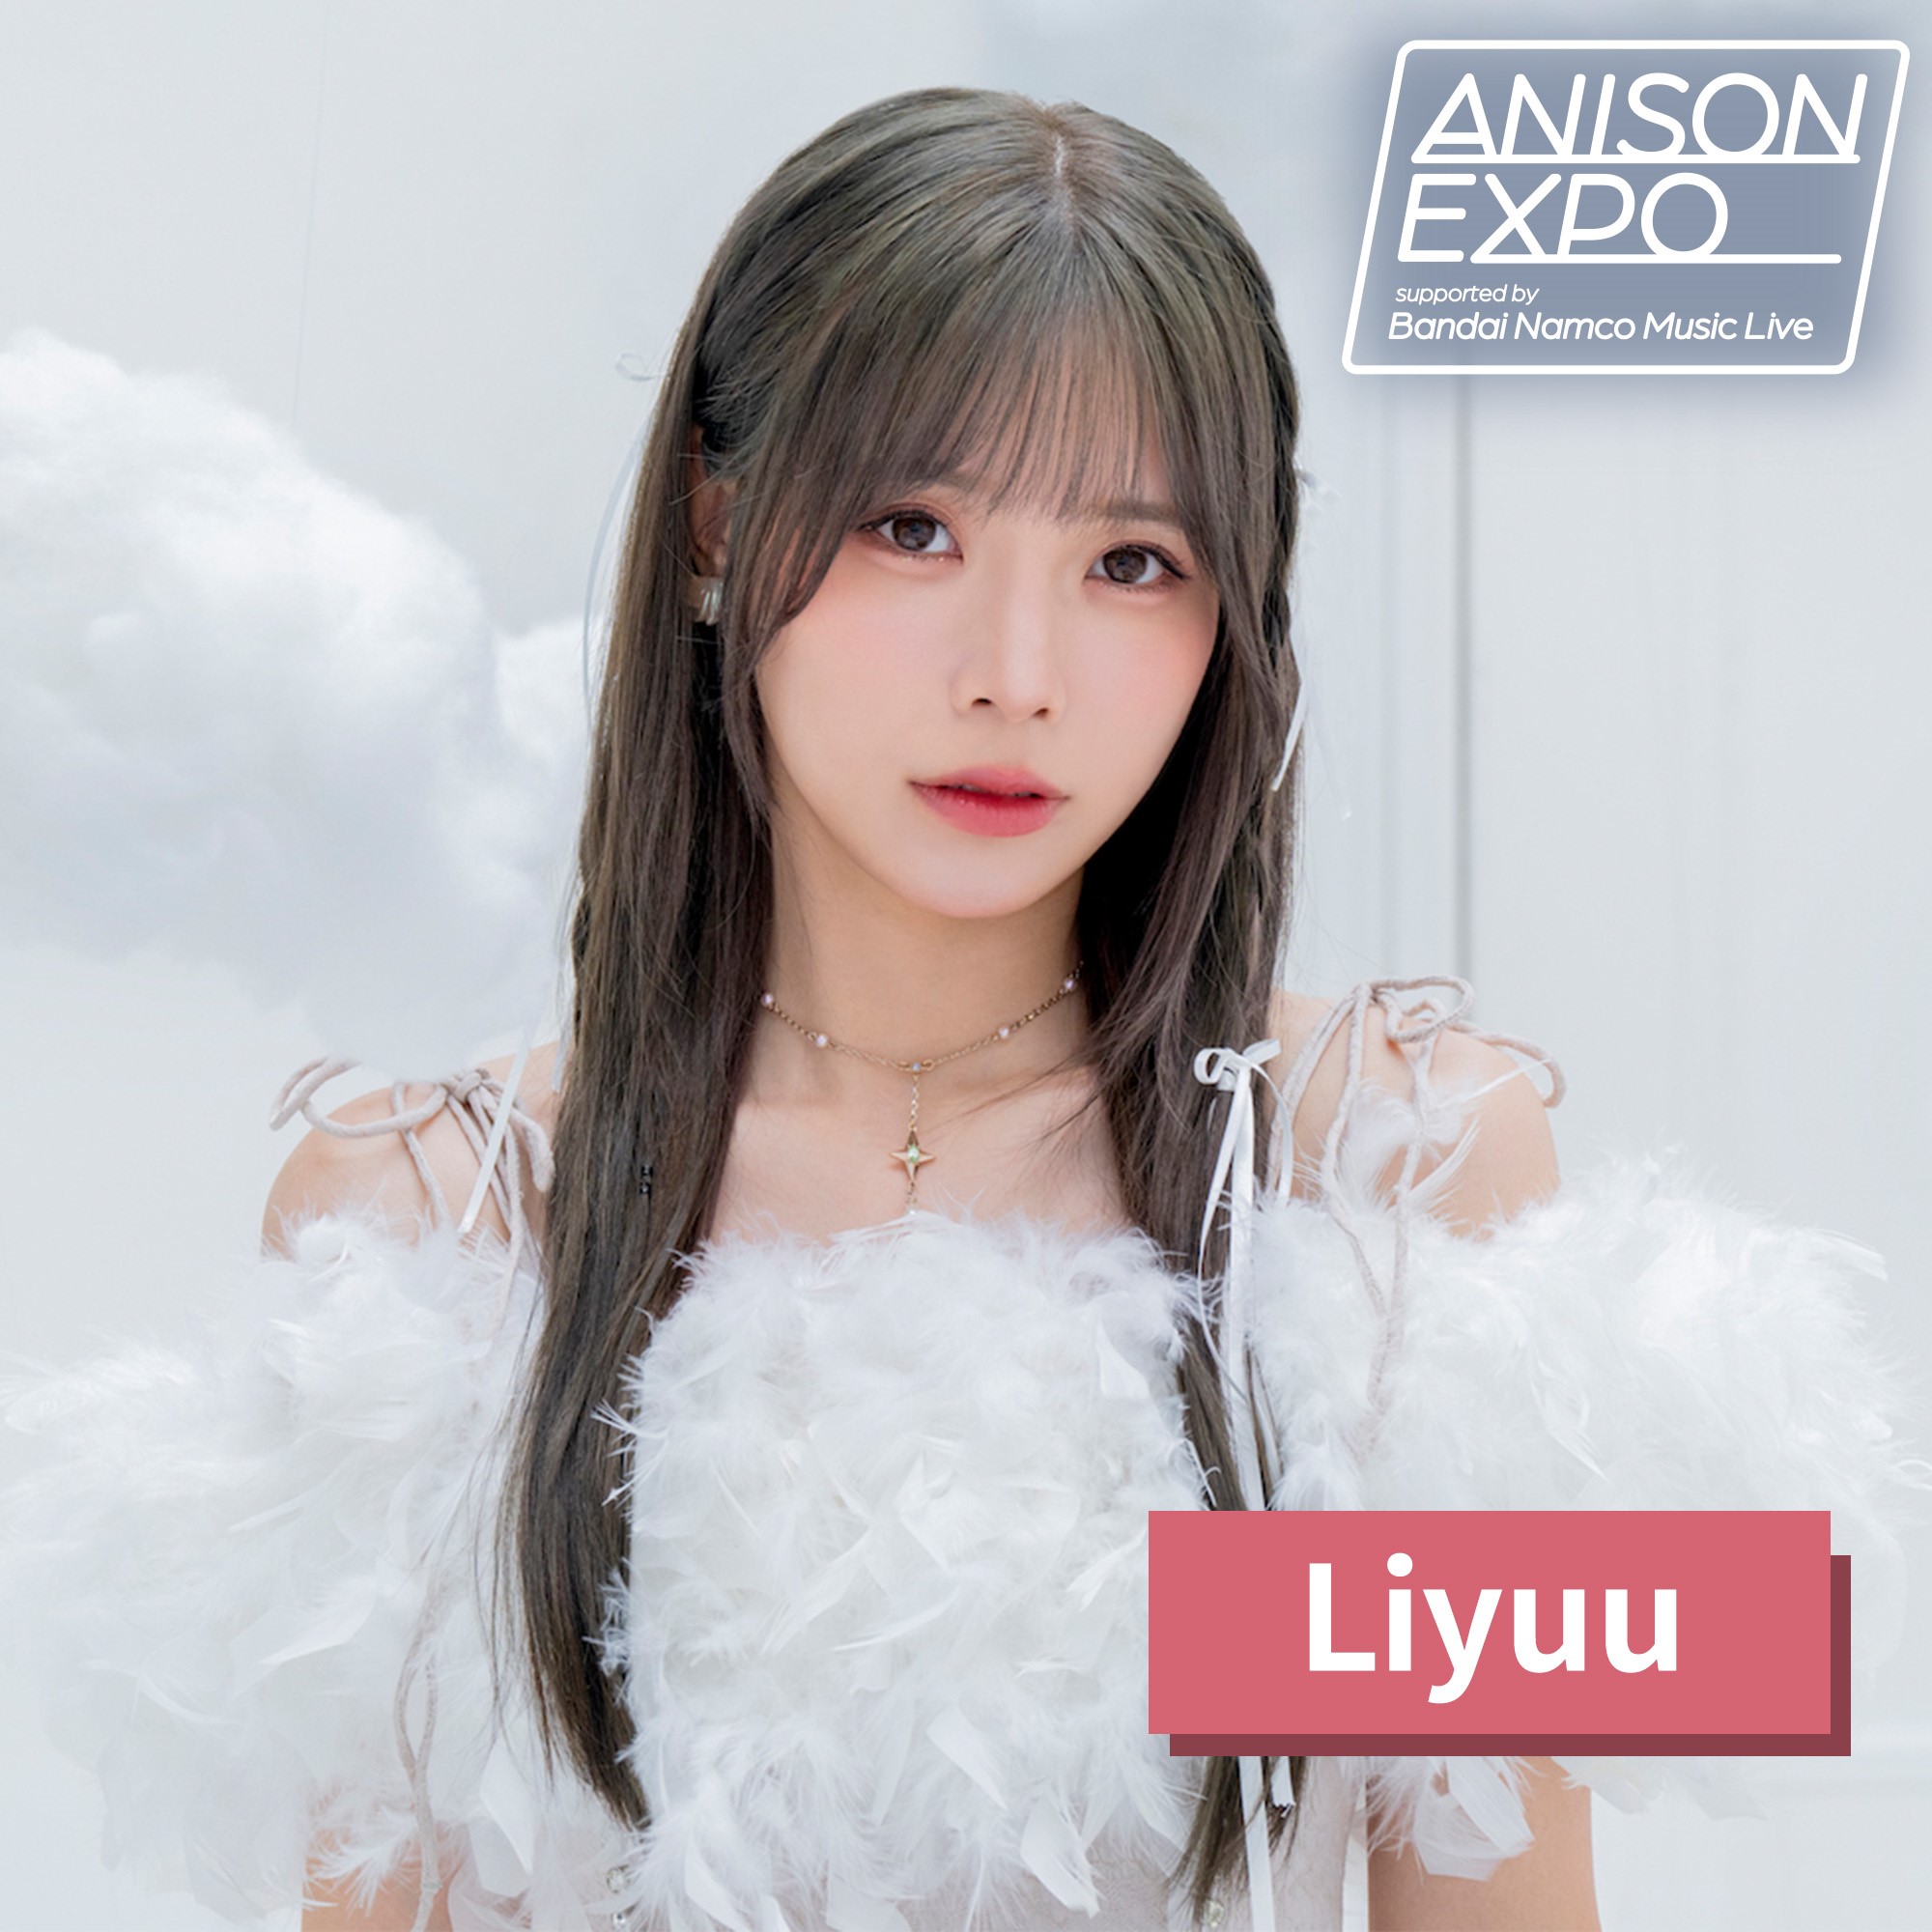 ANISON EXPO「1ミニッツトーク」1月は Liyuuさん！